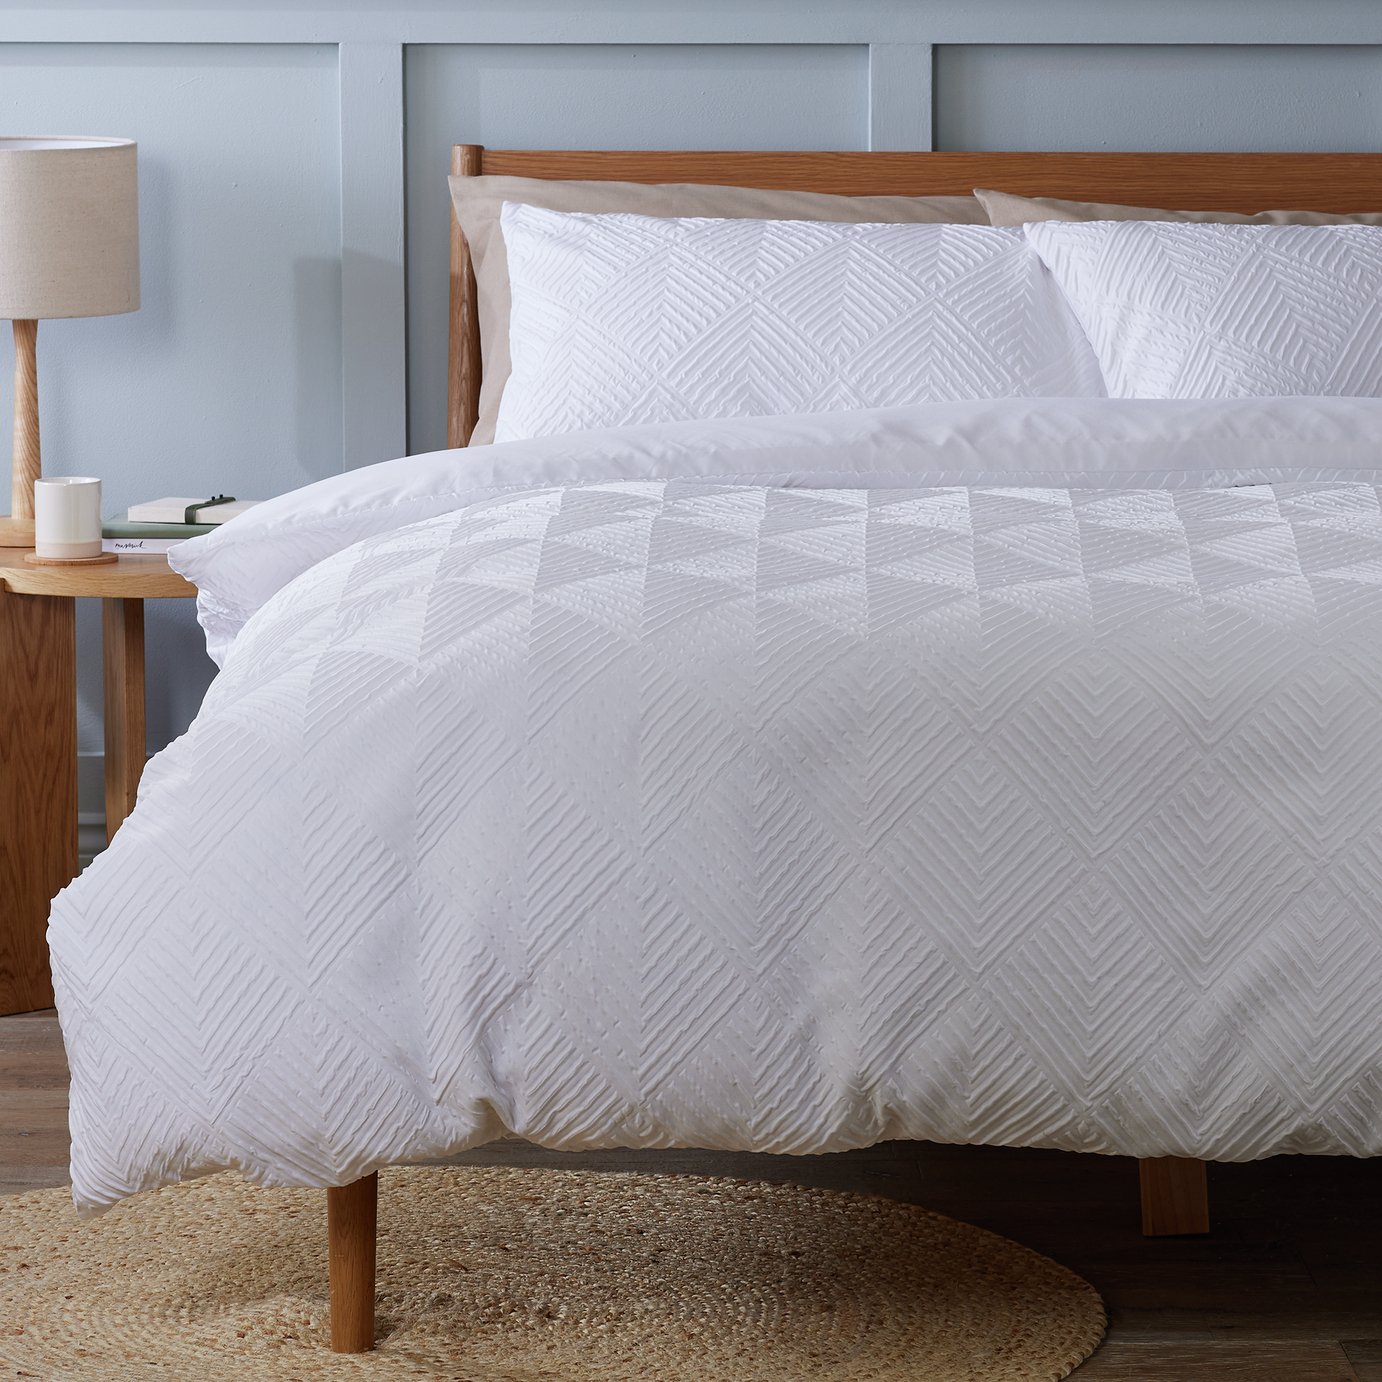 Argos Home Textured Embossed White Bedding Set - Single